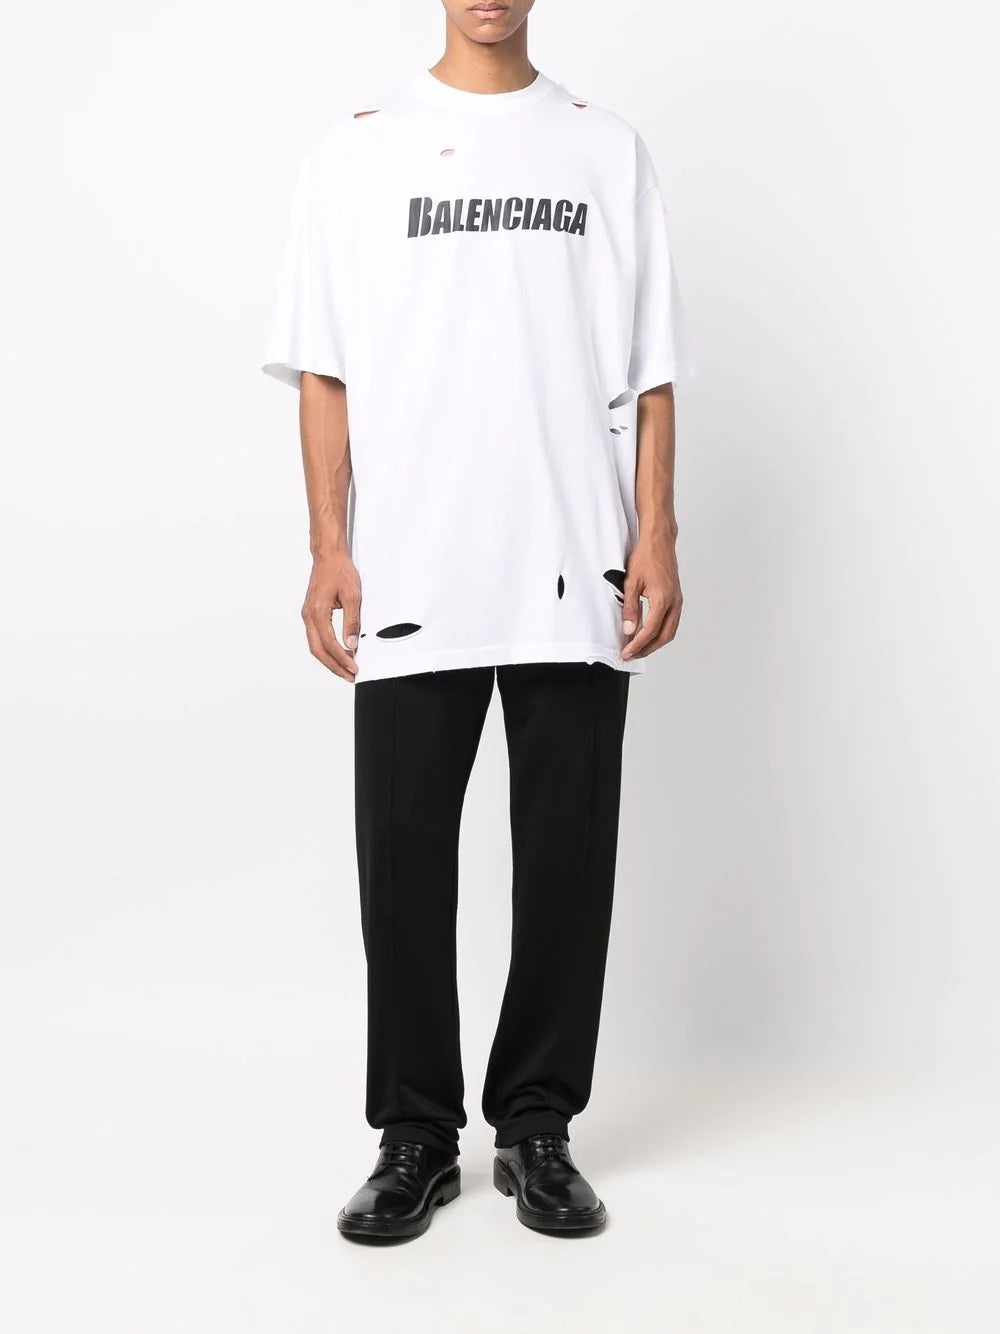 Tricou Balenciaga Logo Print Distressed Alb/Negru Ultra Oversized